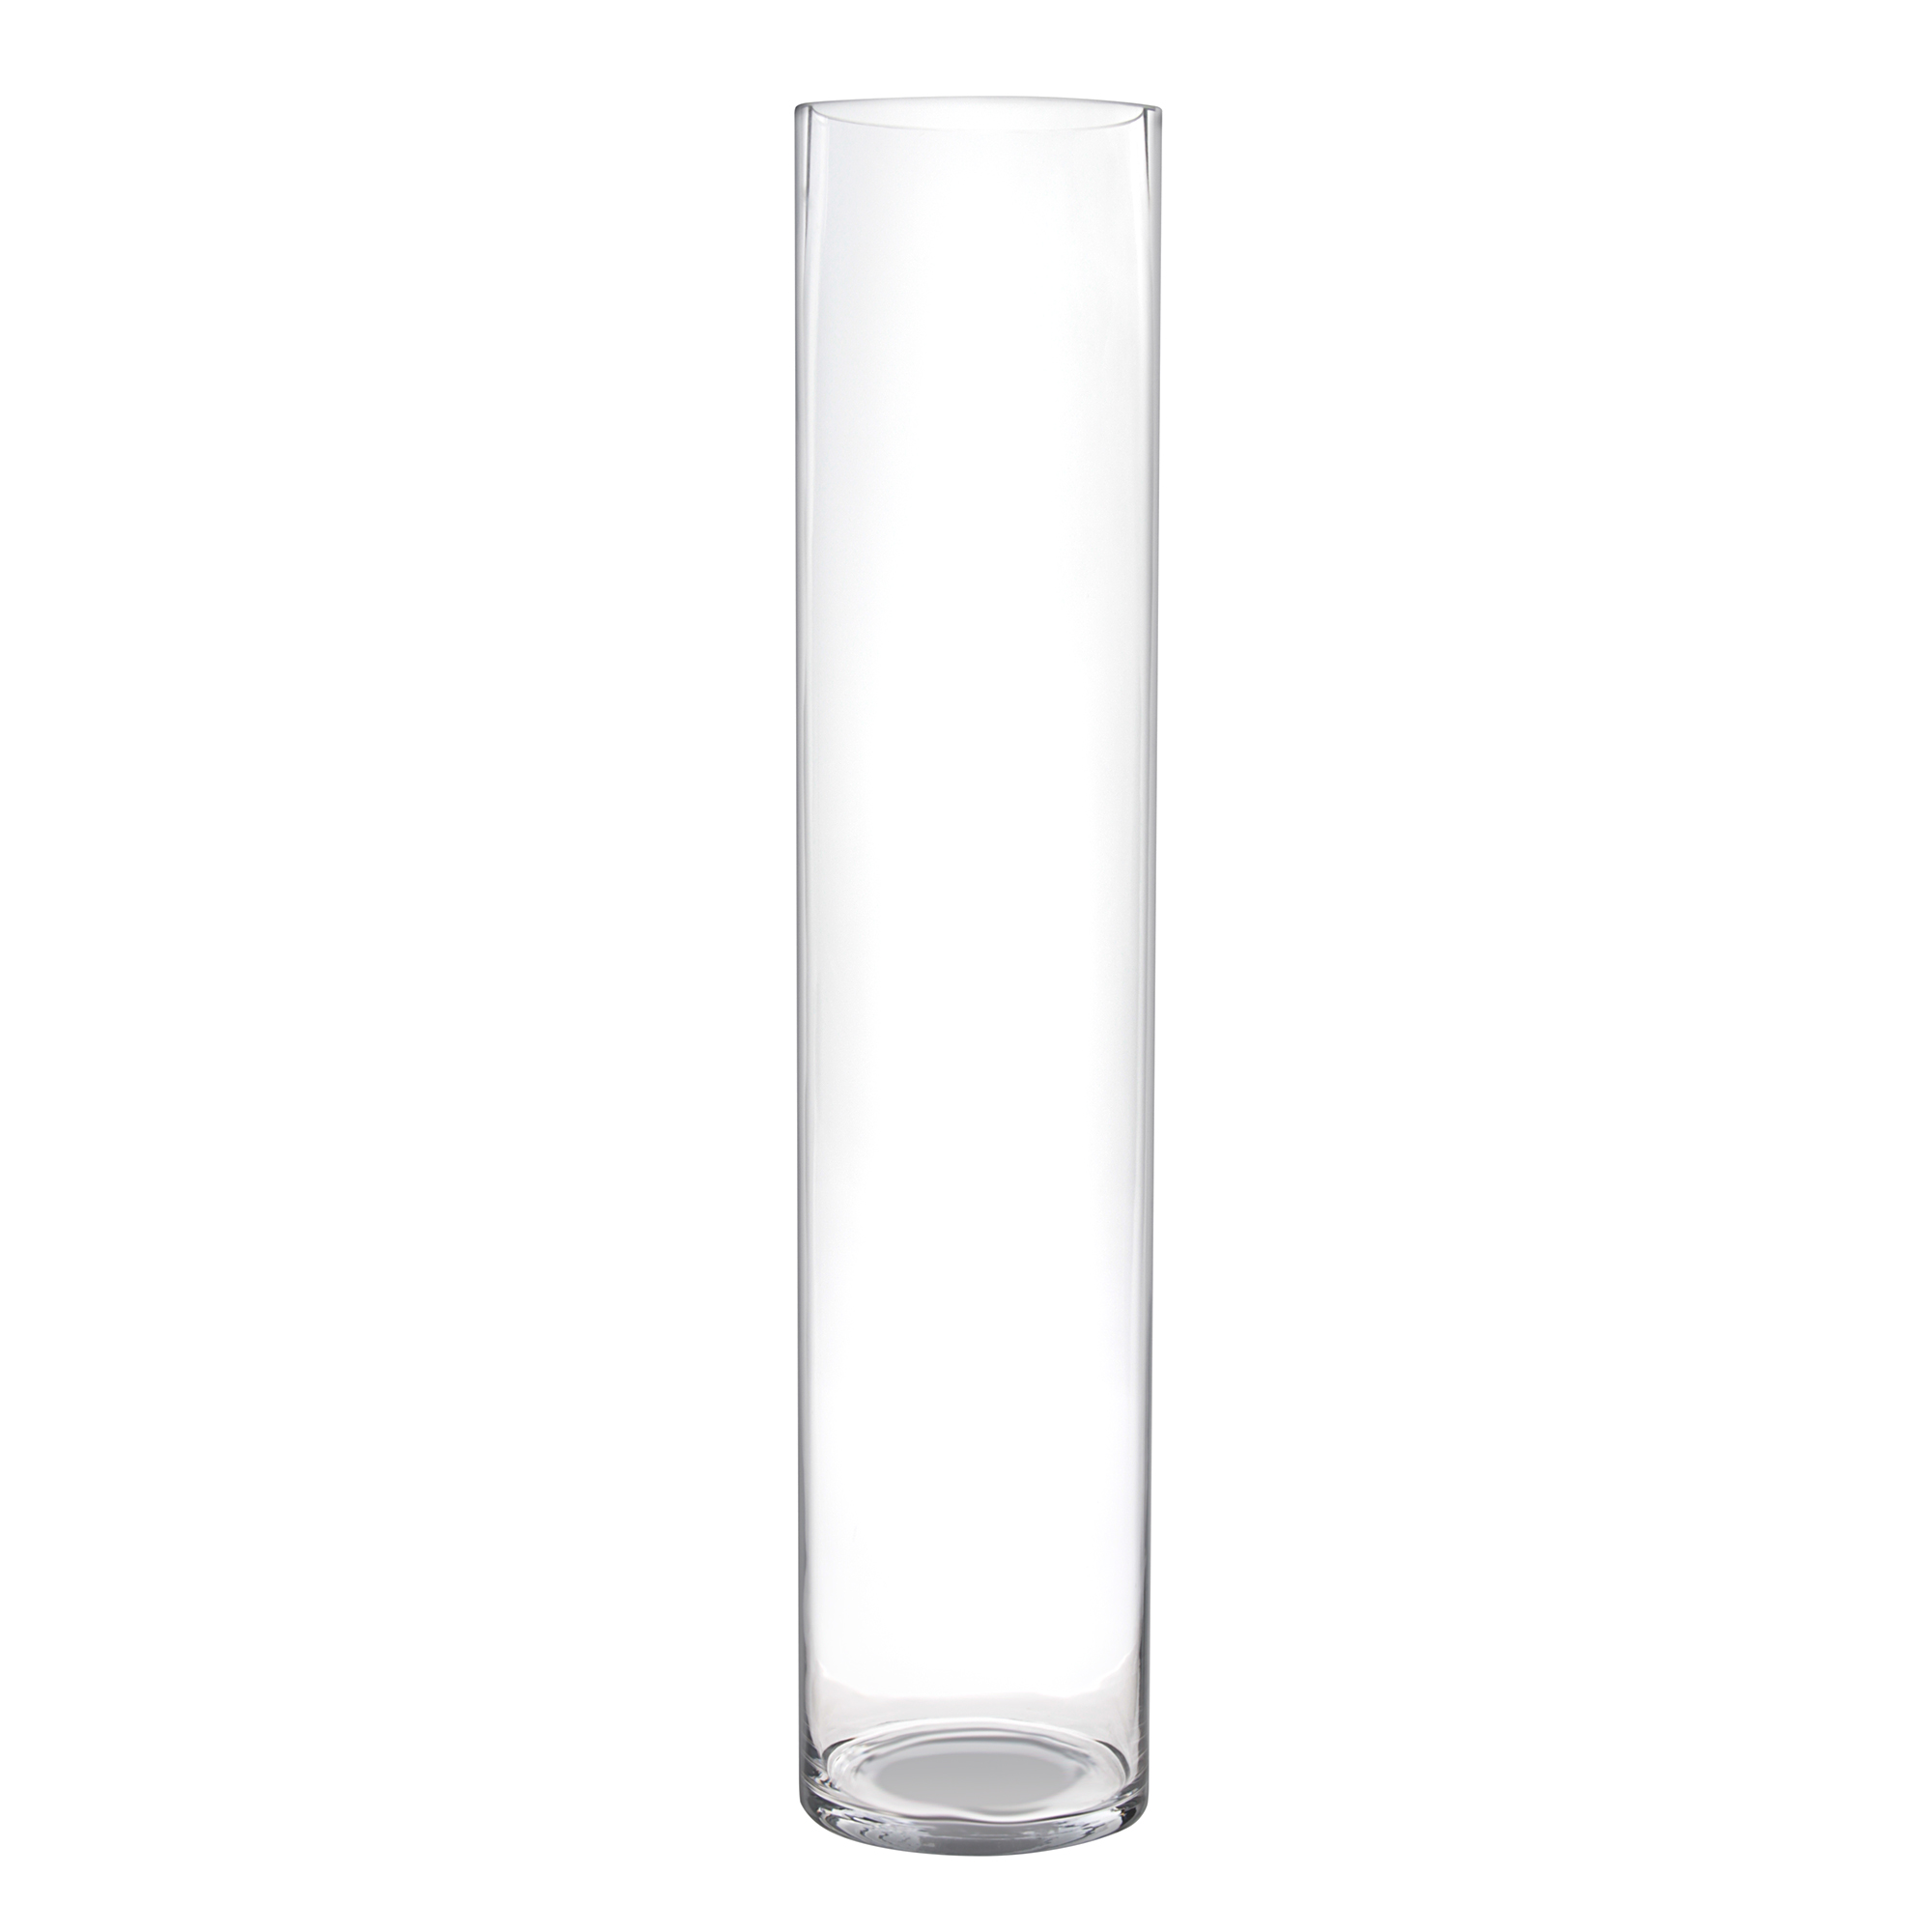 Ваза Hakbijl glass cylinder 90см